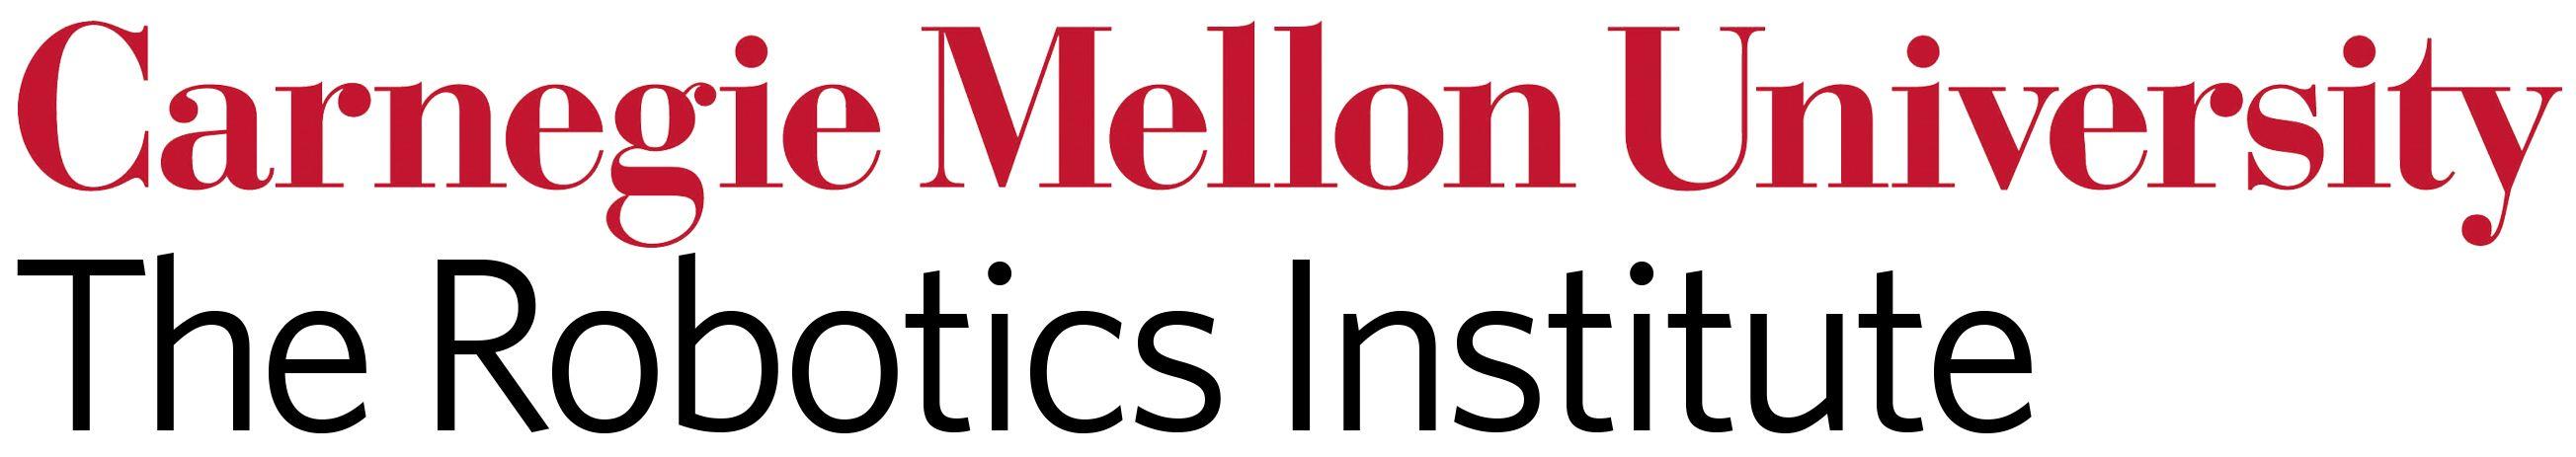 Carnegie Melon Logo - RI Logos - The Robotics Institute Carnegie Mellon University